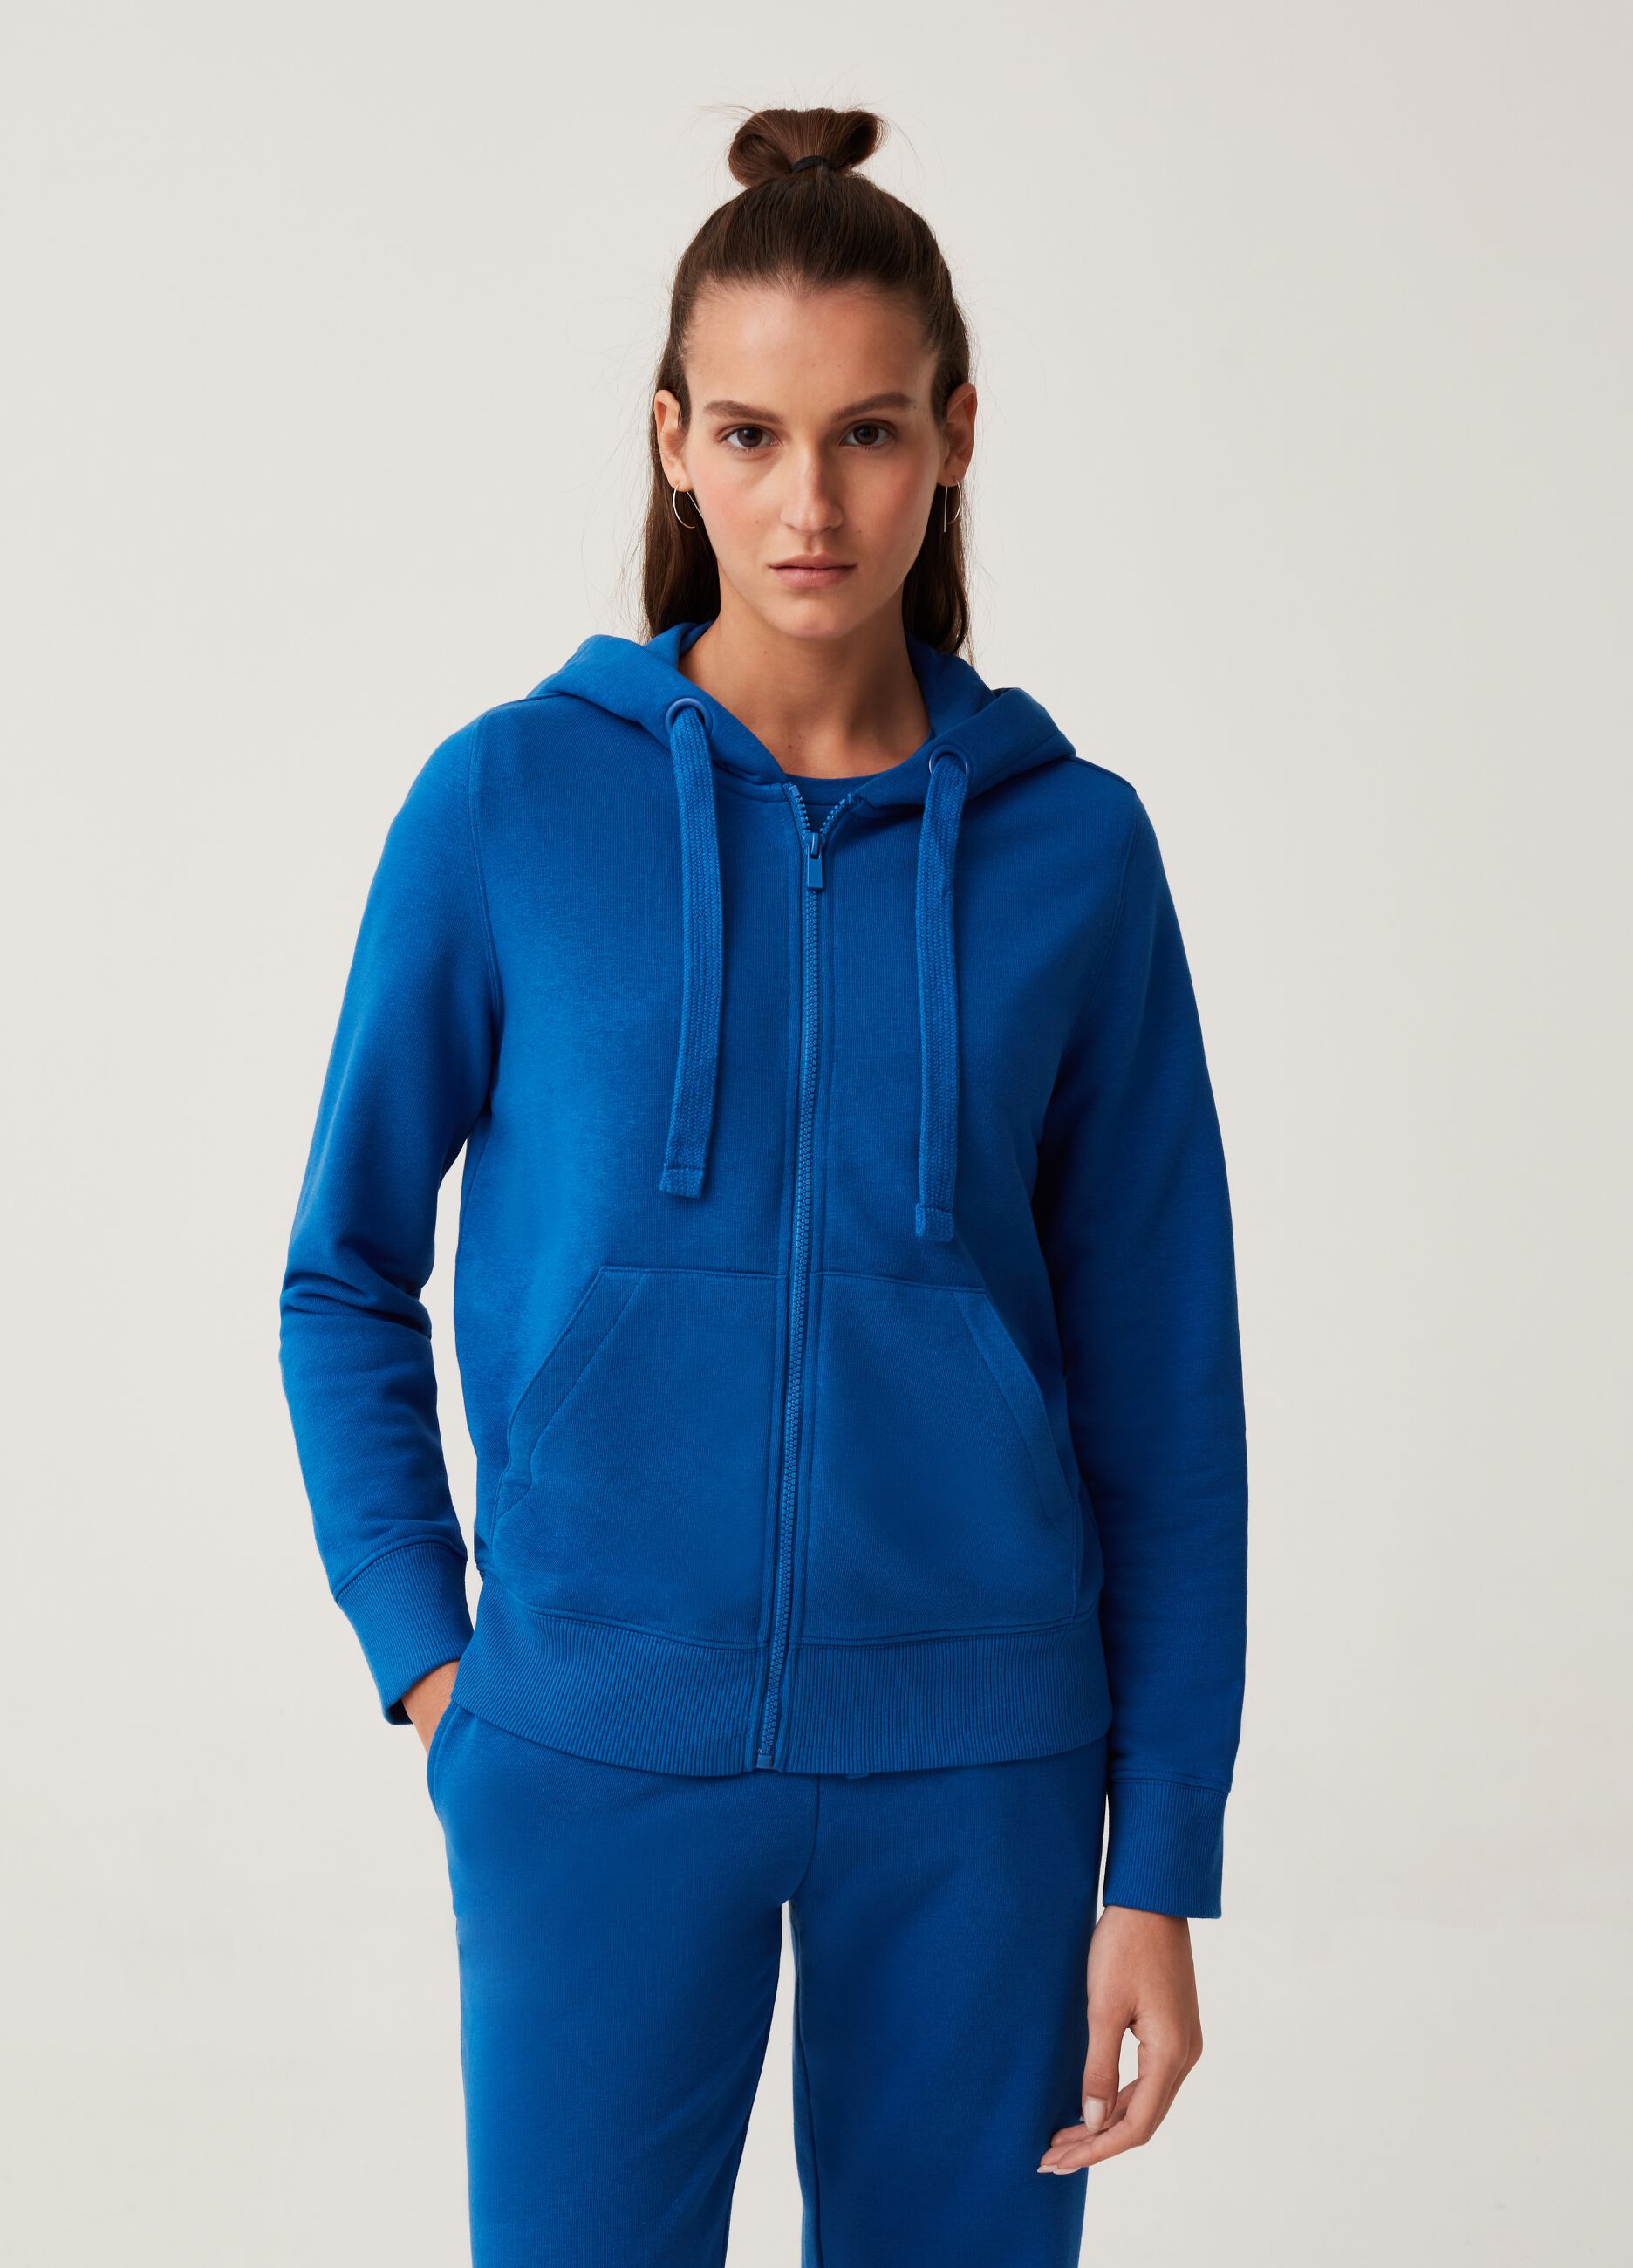 Woman's Cornflower Blue Fitness full-zip fleece sweatshirt with hood